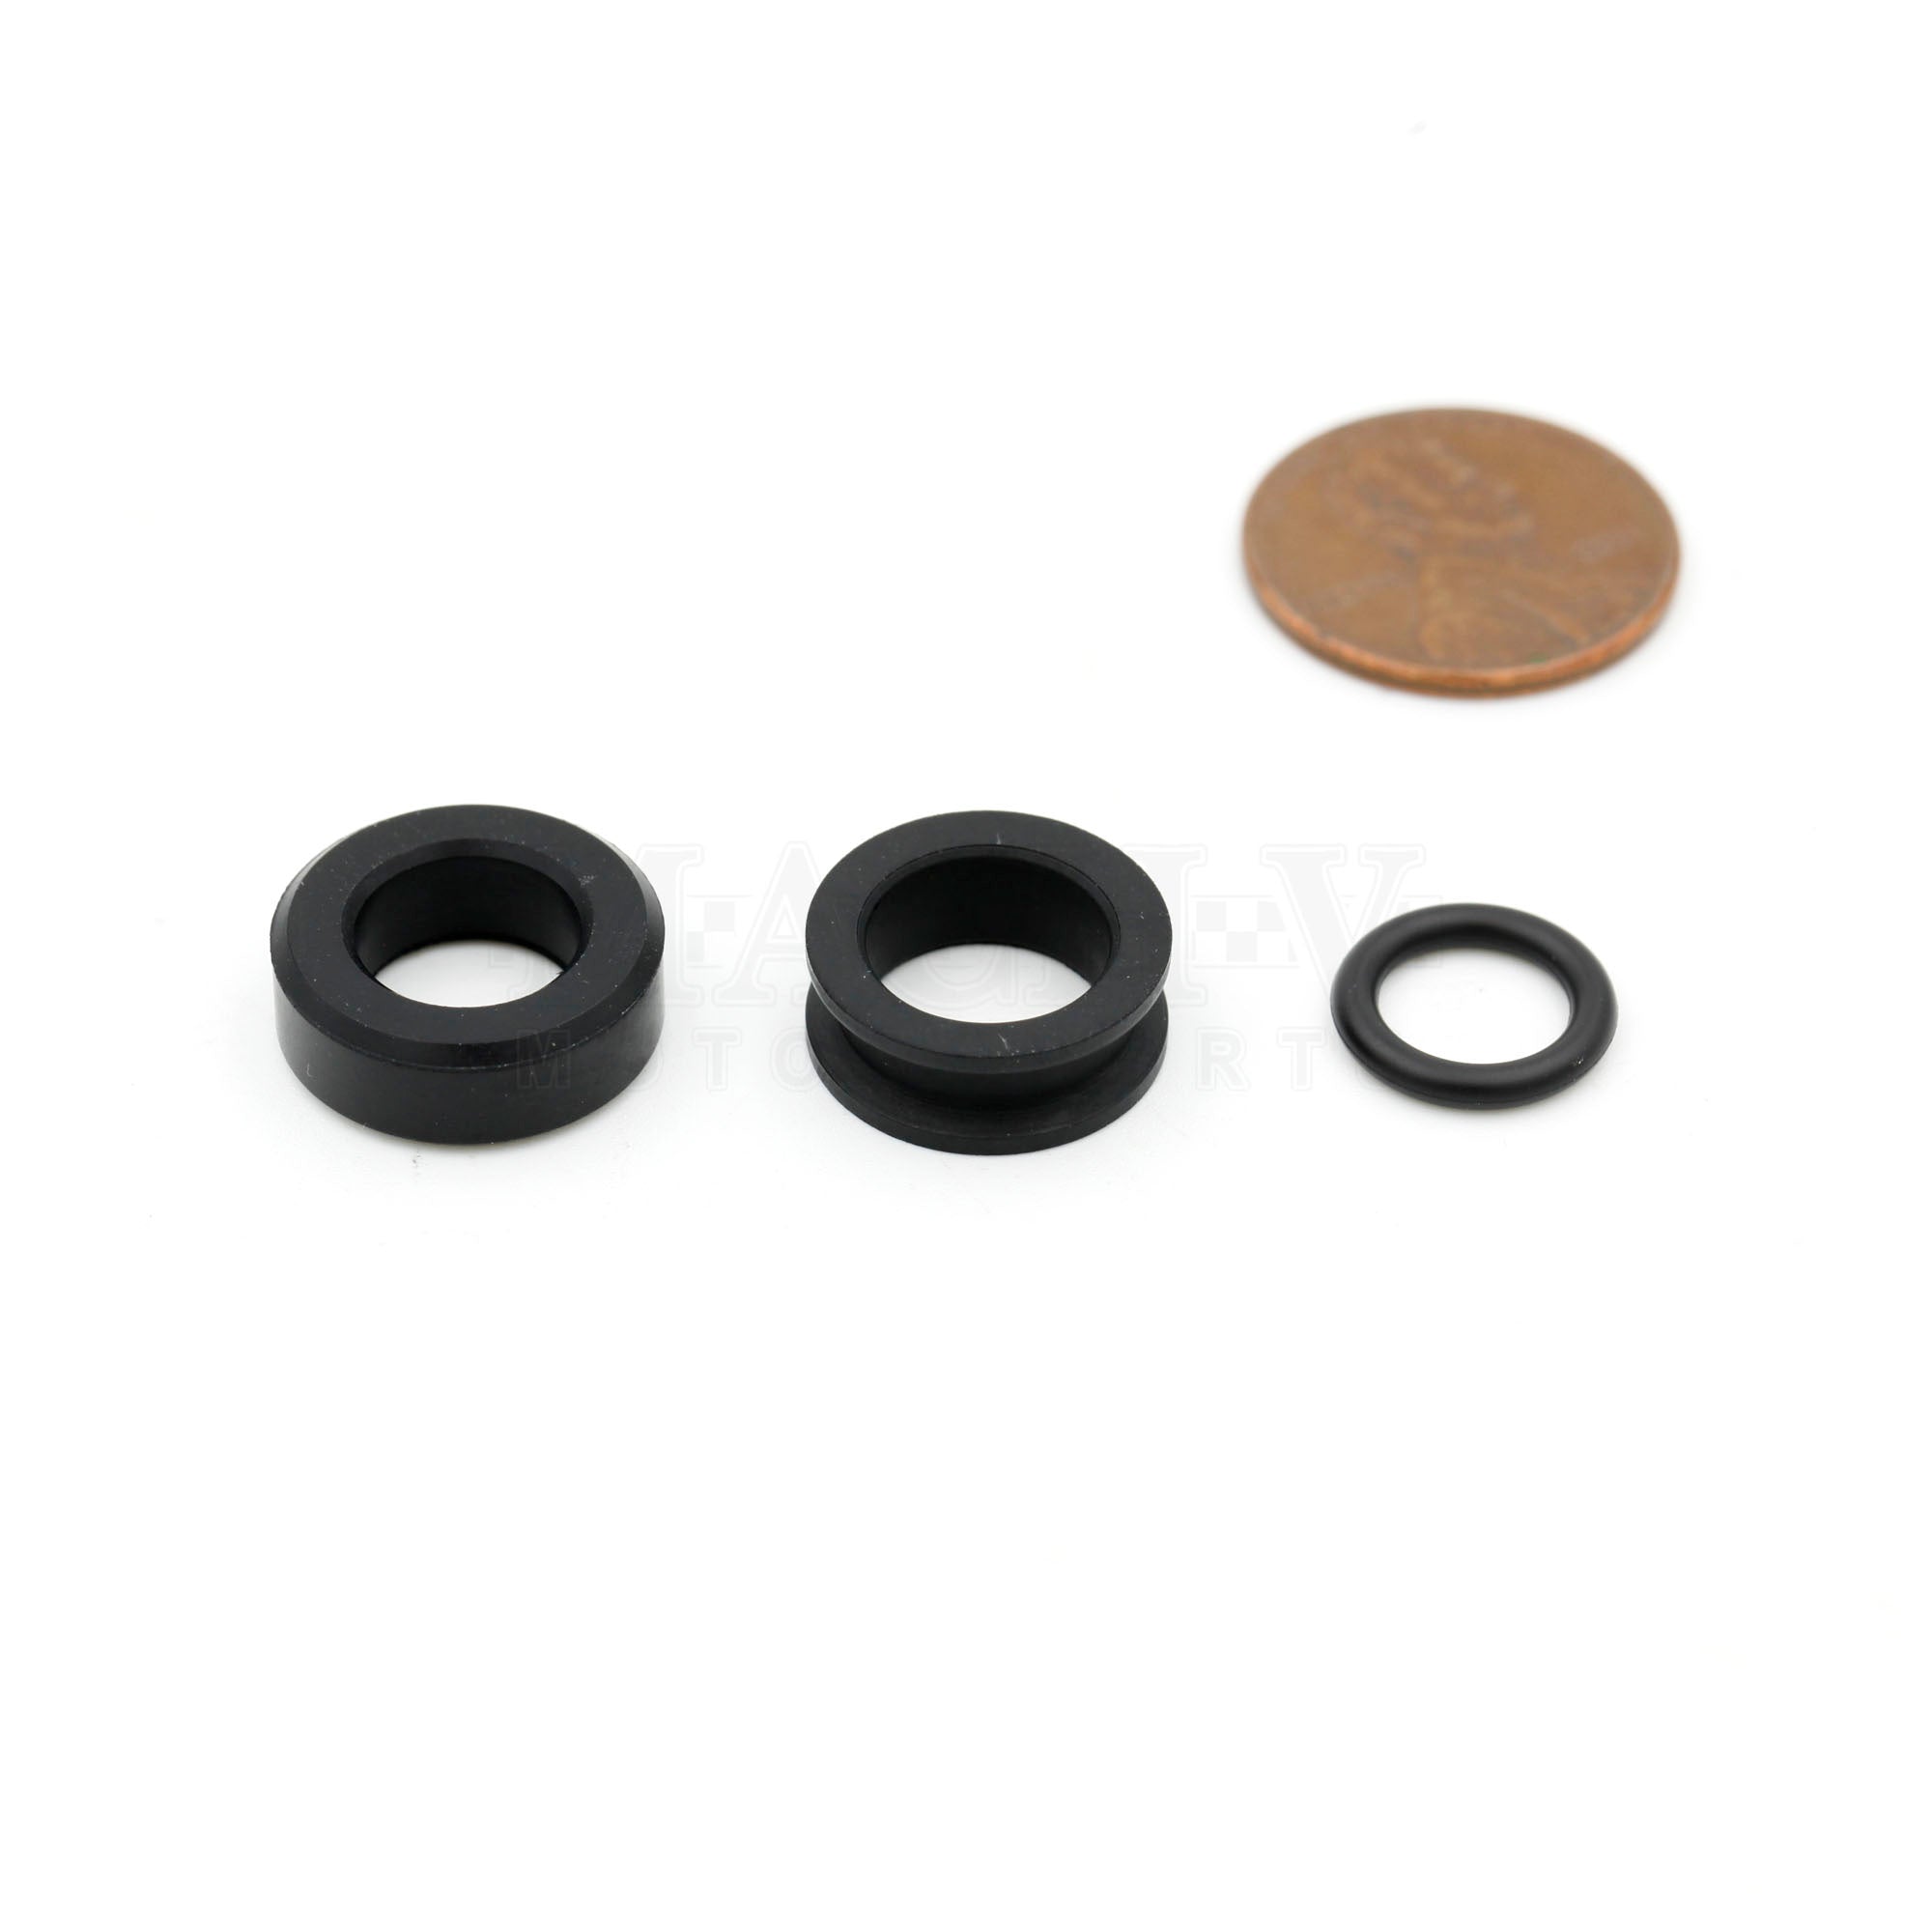 Generasis 36 Pcs O-Ring Kit 3-22mm with 18 sizes, 2 pcs each Nitrile Rubber